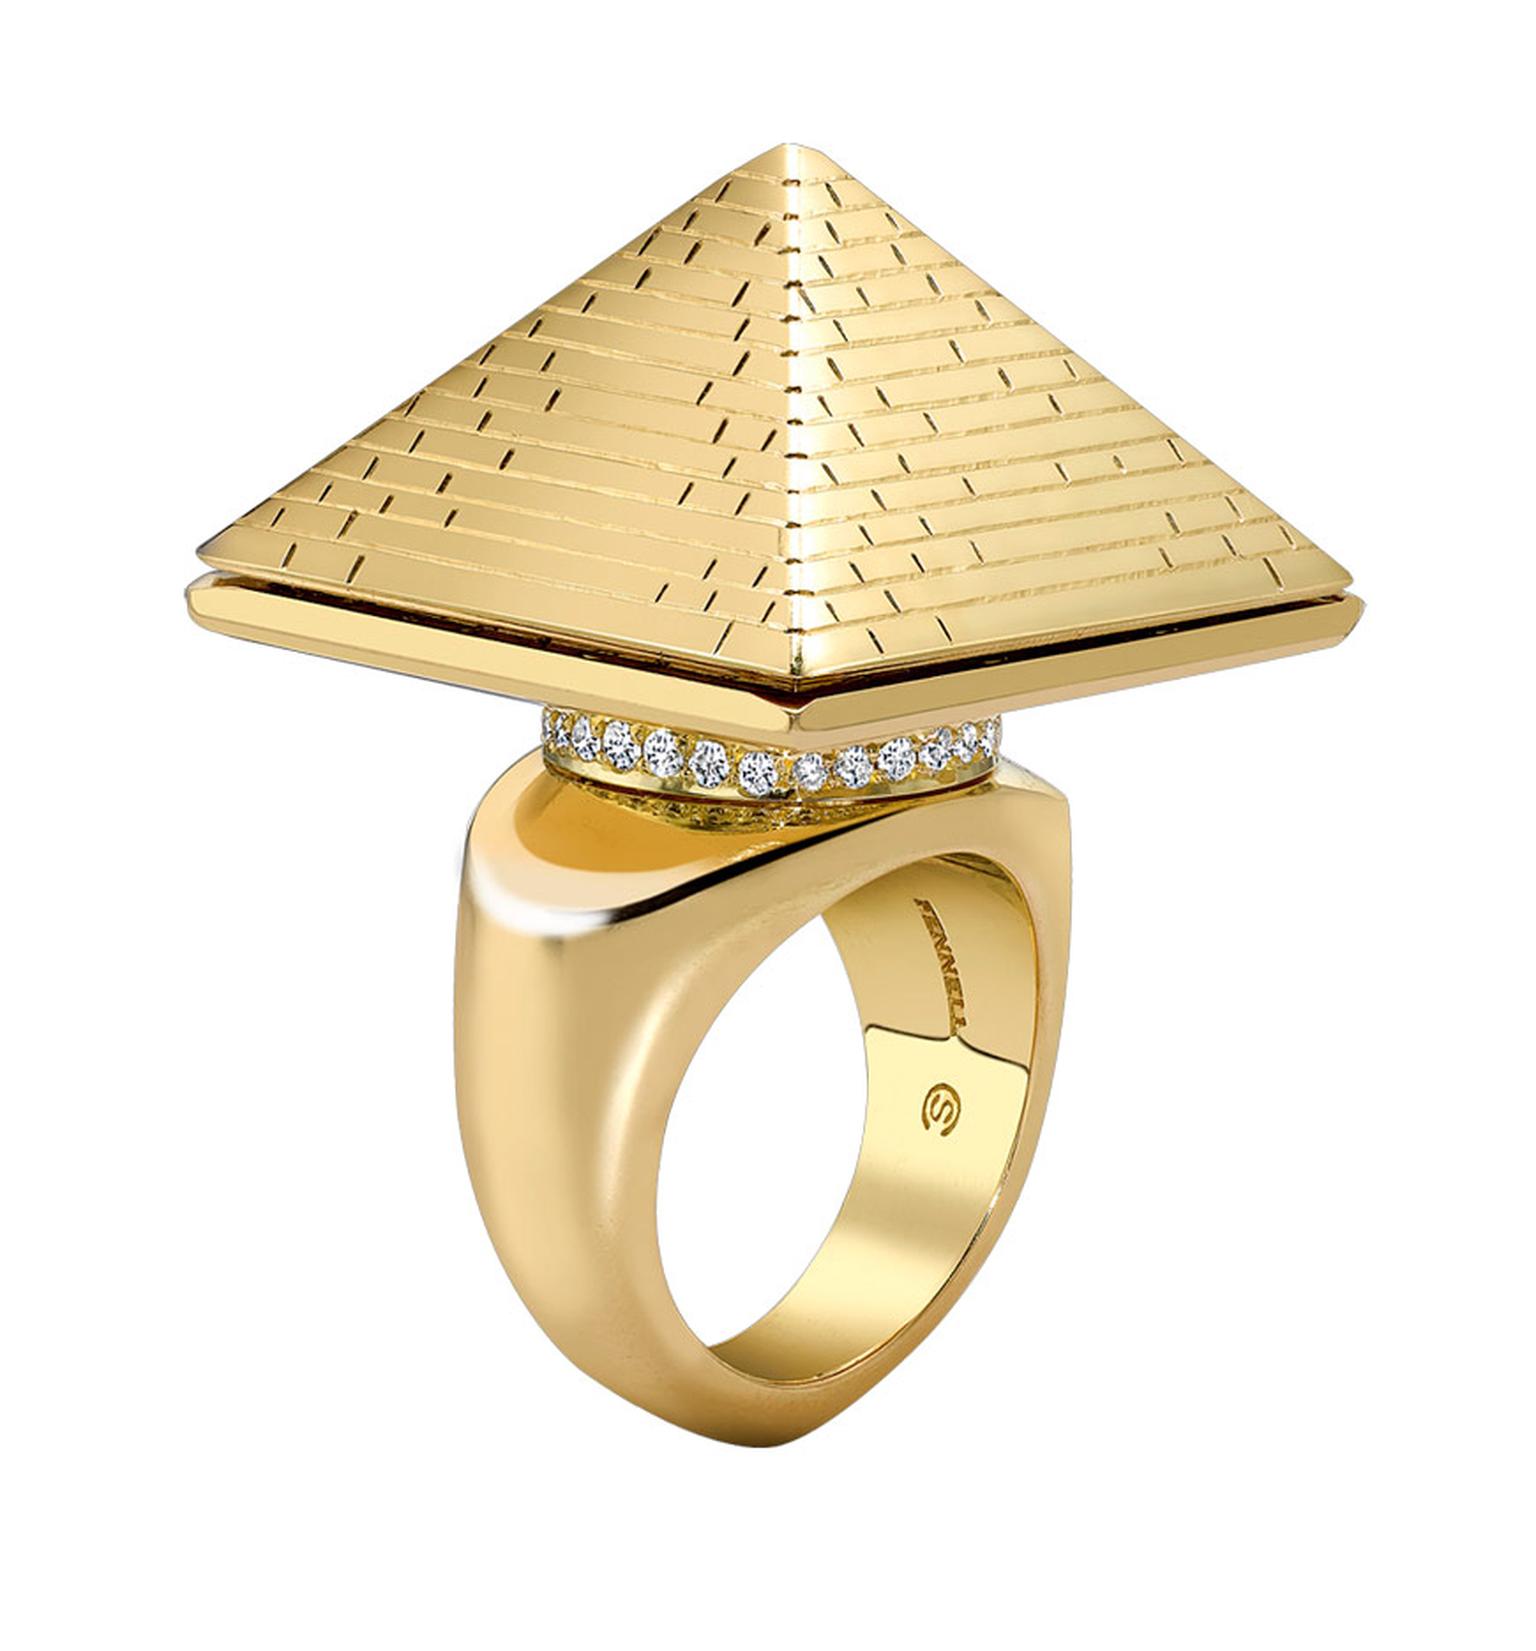 Theo-Fennell-Pyramid-Ring.jpg